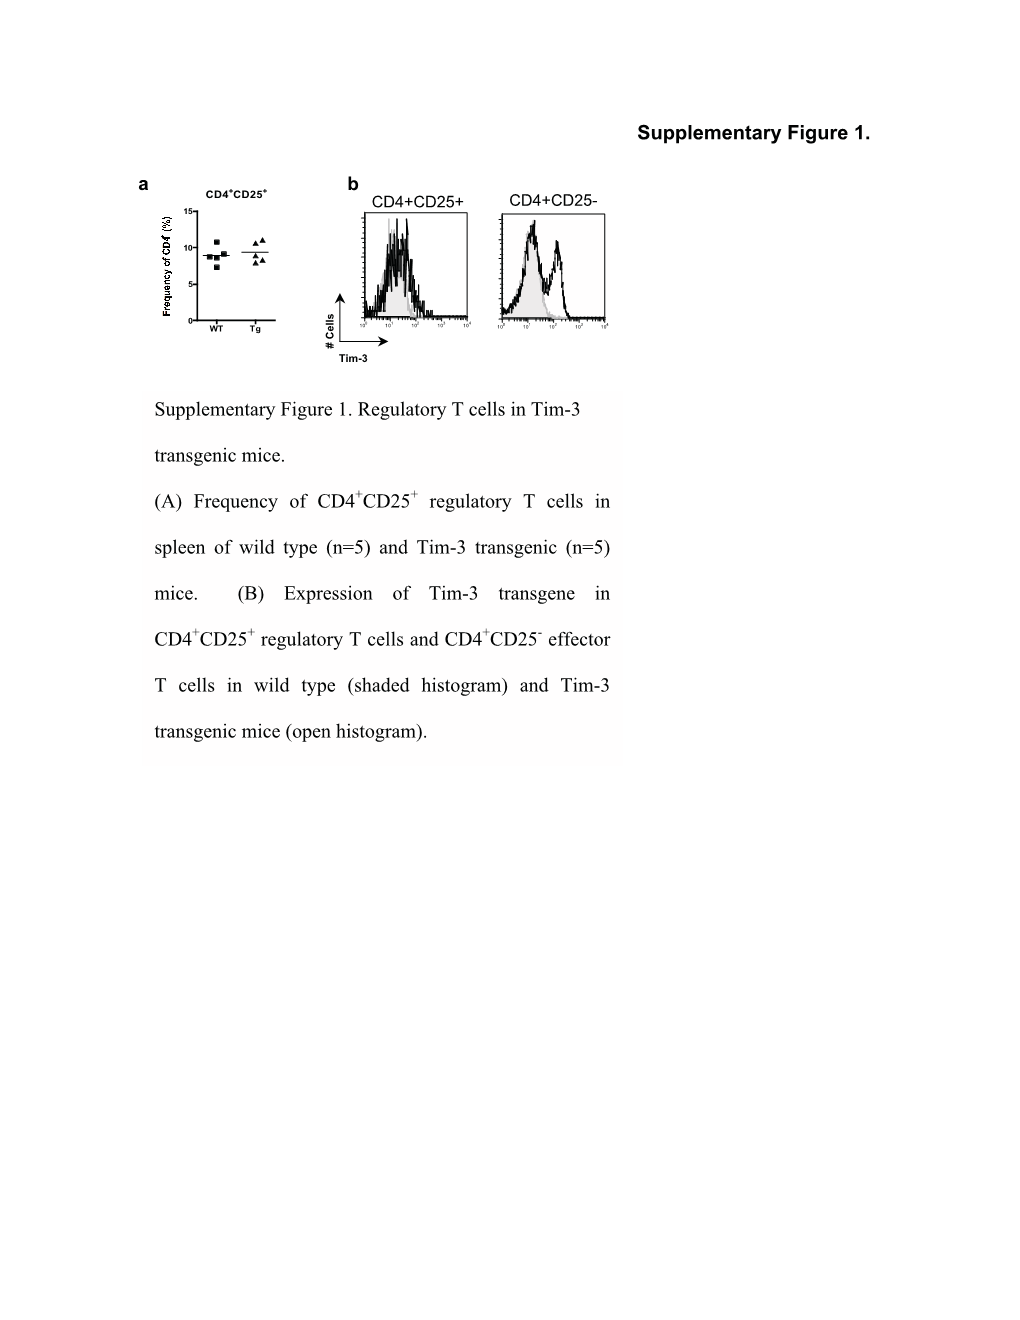 (A) Frequency of CD4 CD25 Regulator